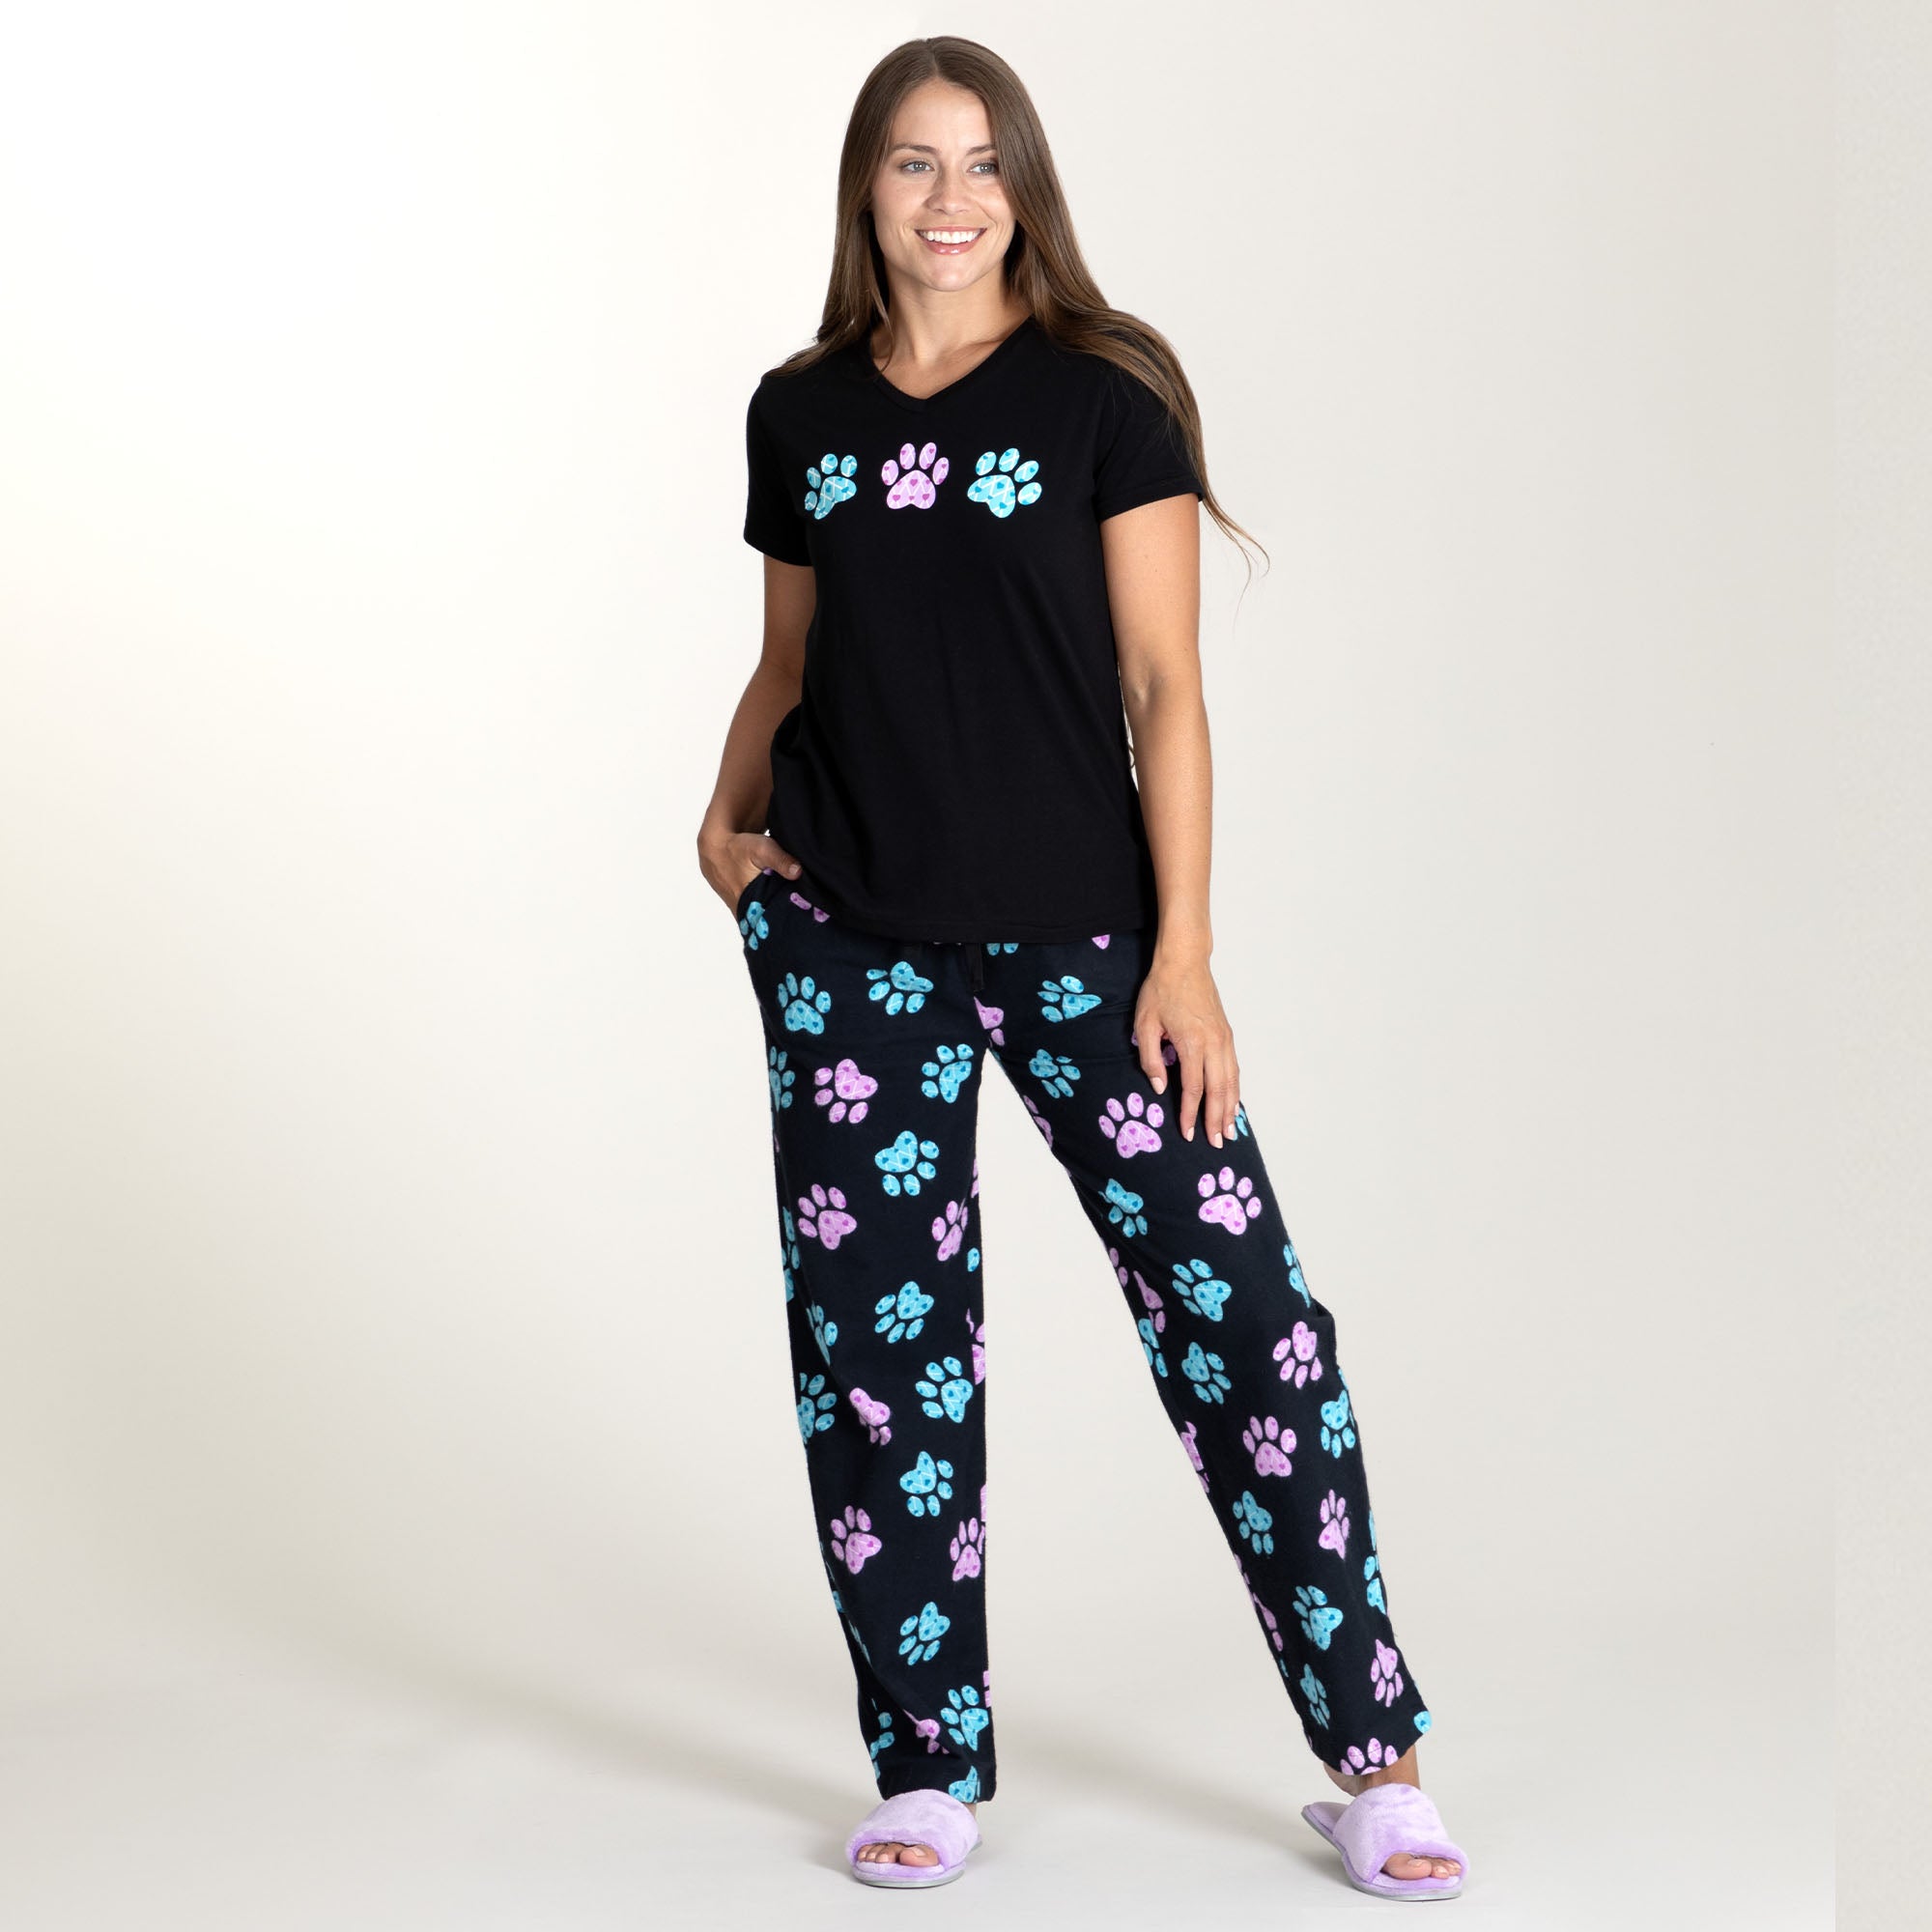 Argyle Paws Flannel Pajama Set - M